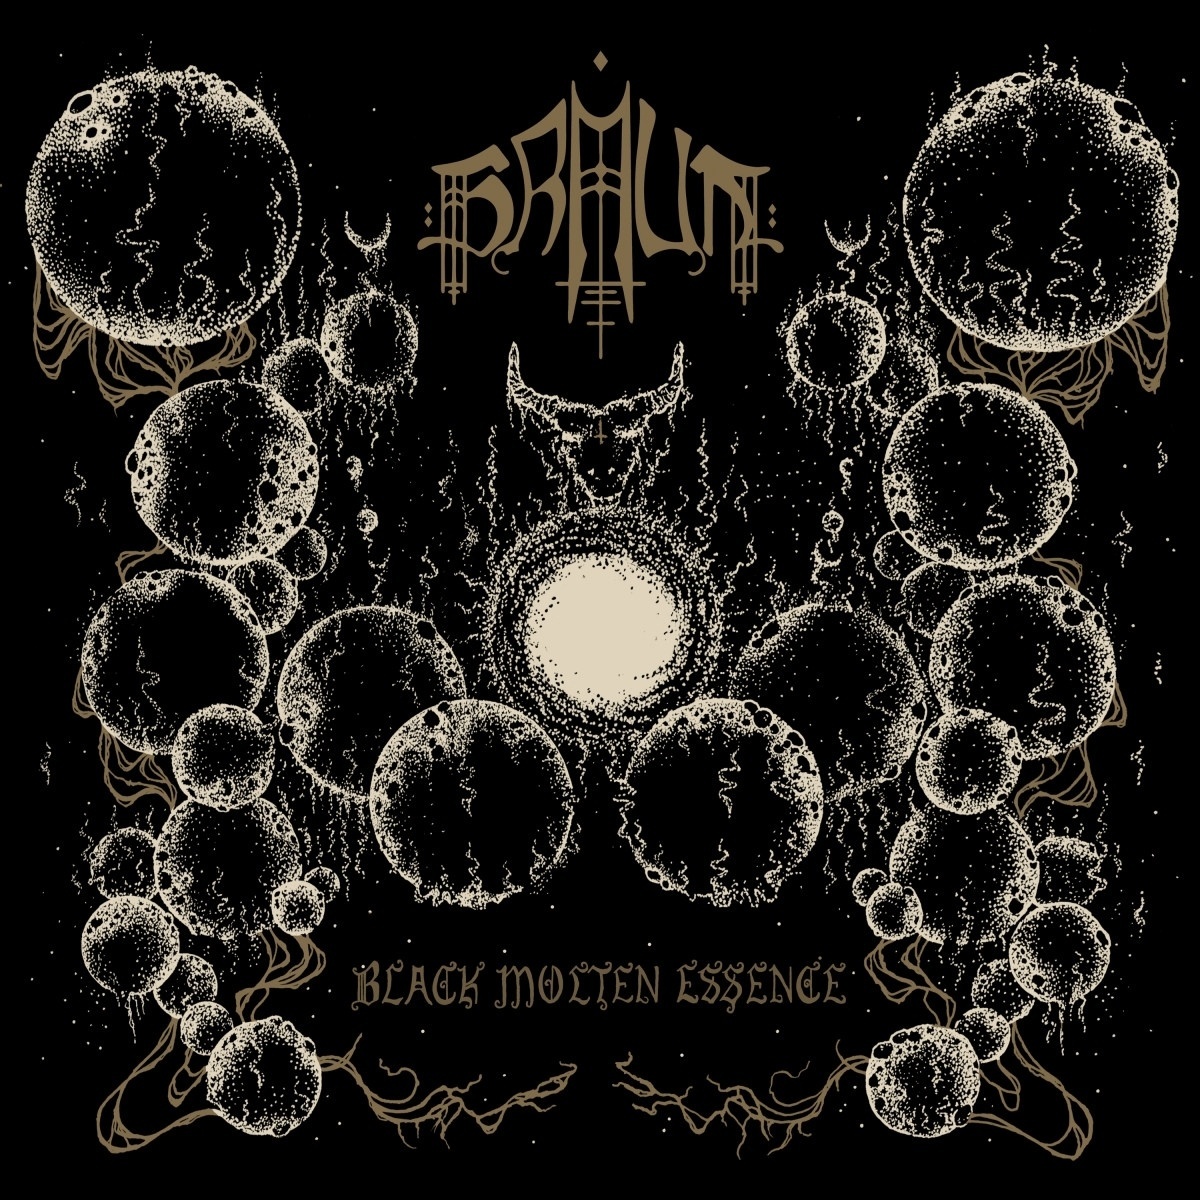 Black Molton Essence - Hraun. (CD)